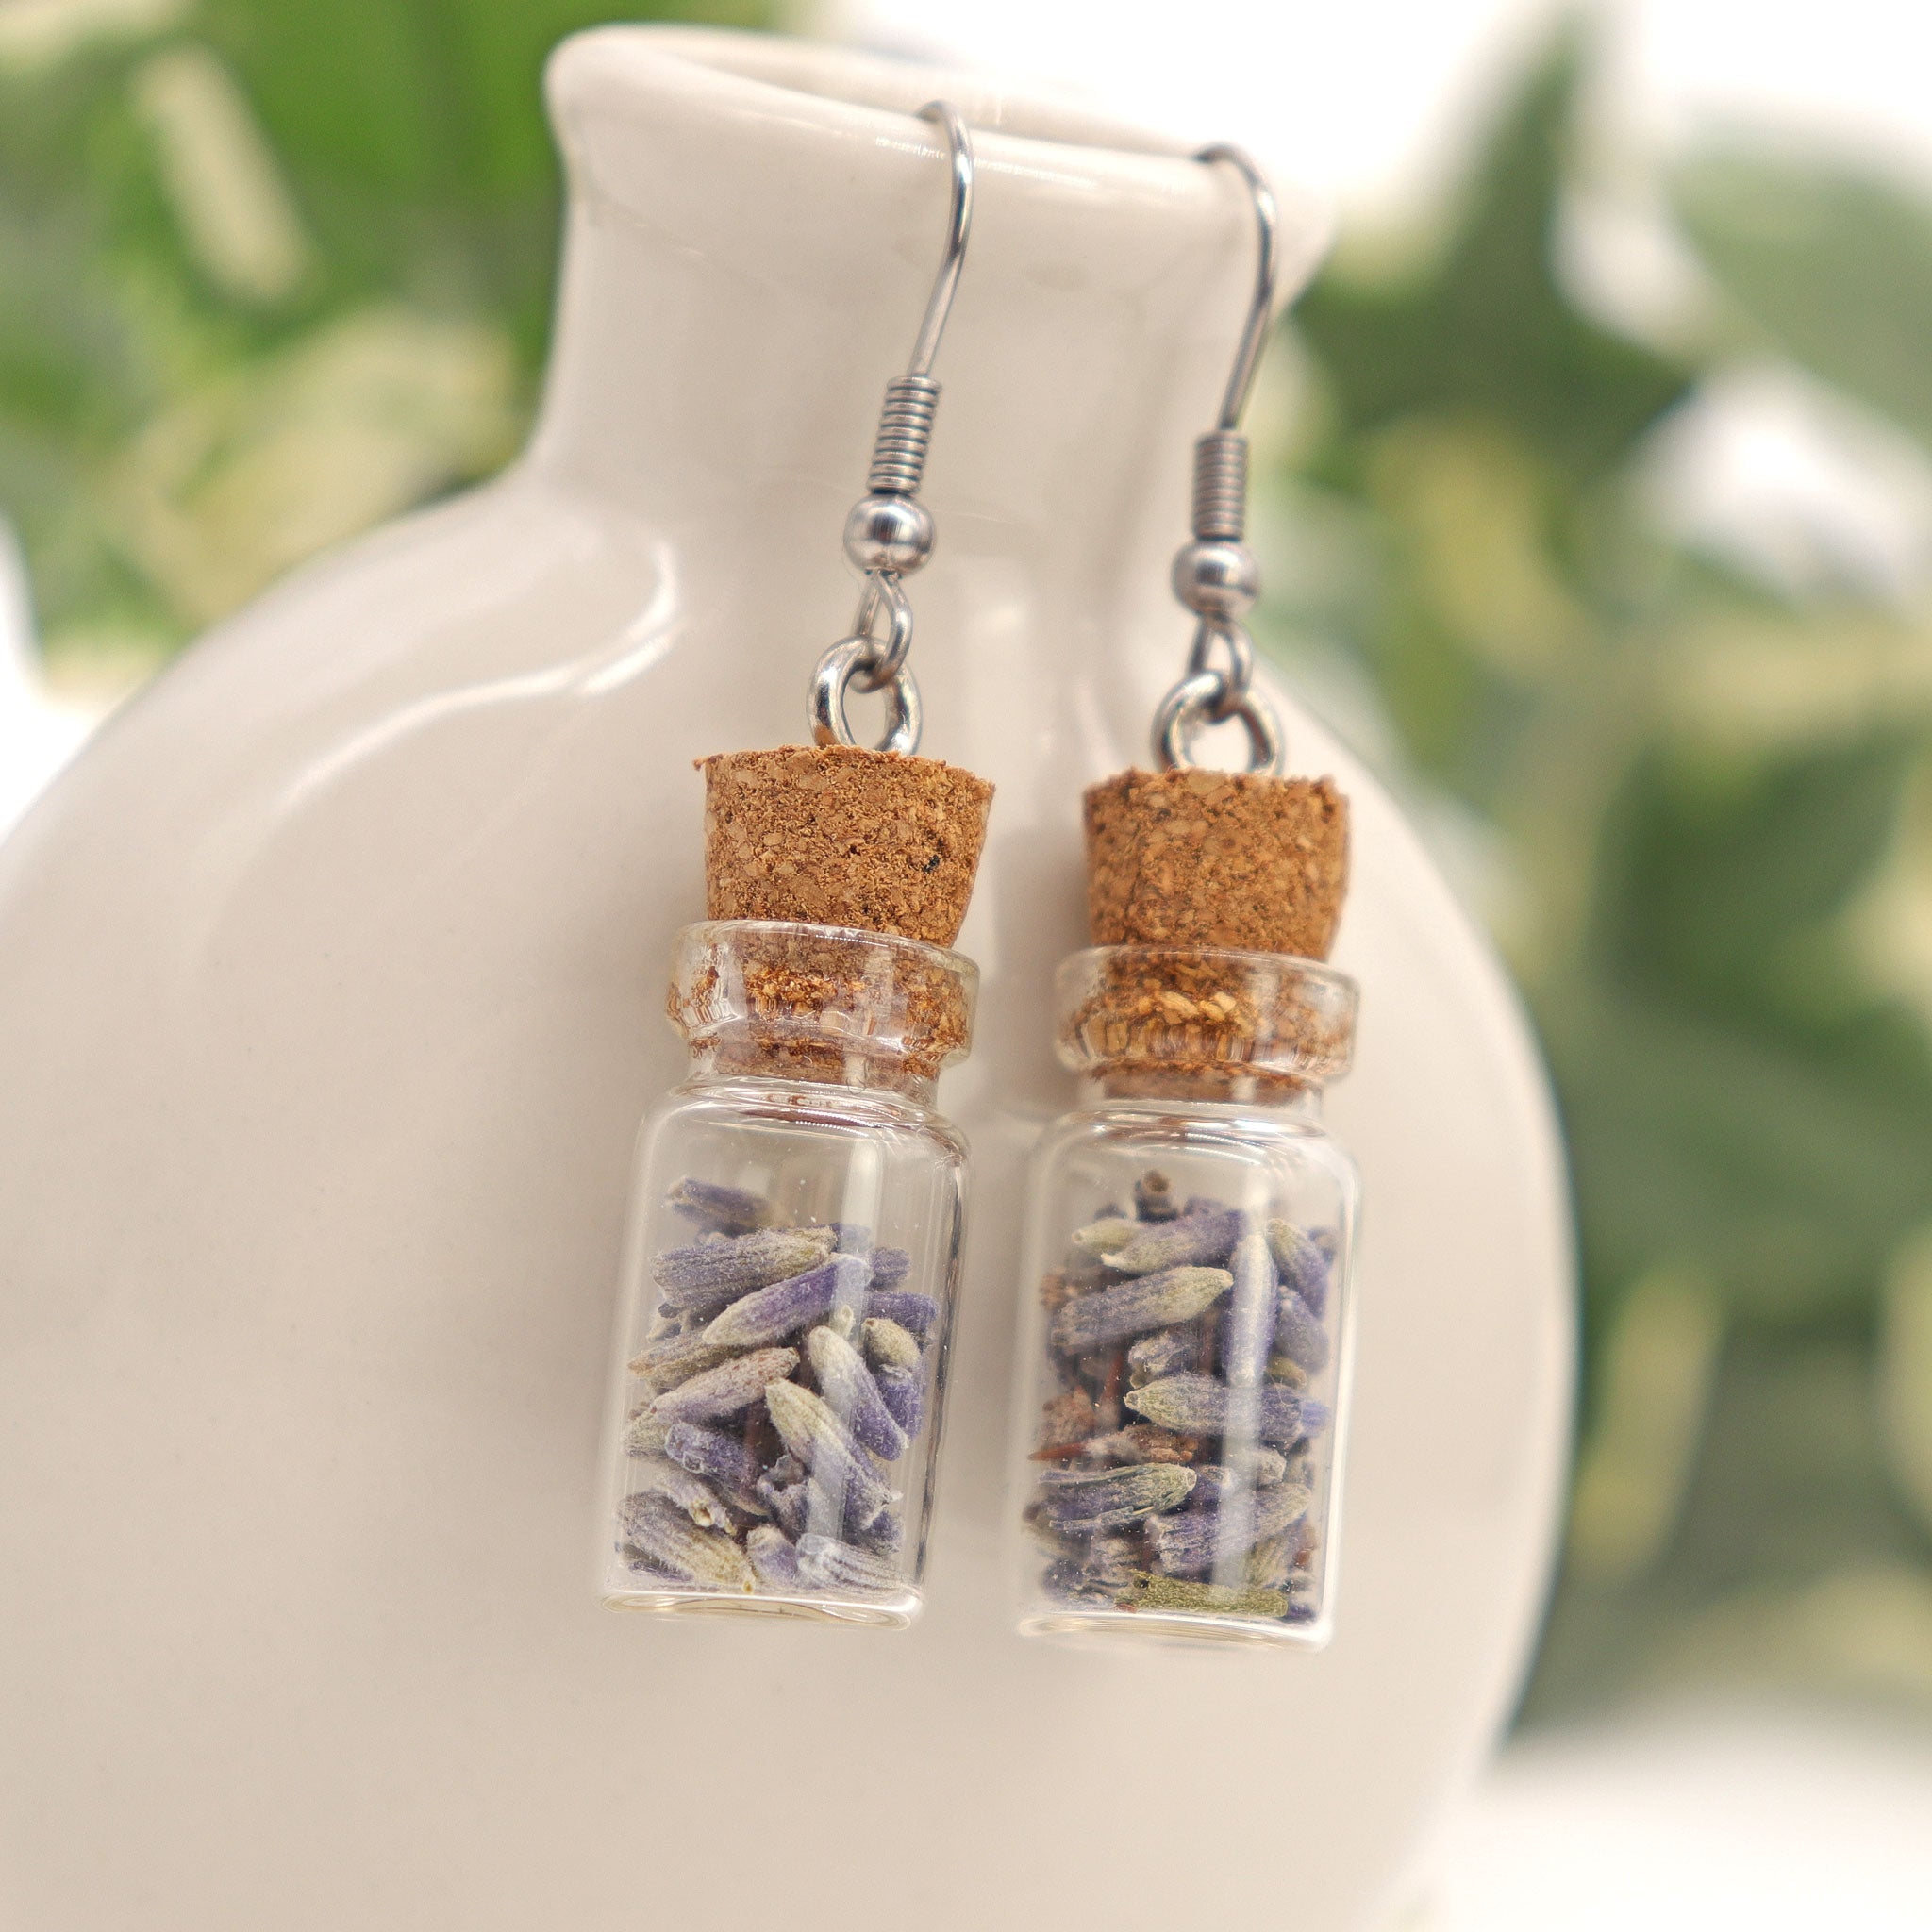 Lavender Herb Bottle Earrings - 13 Moons